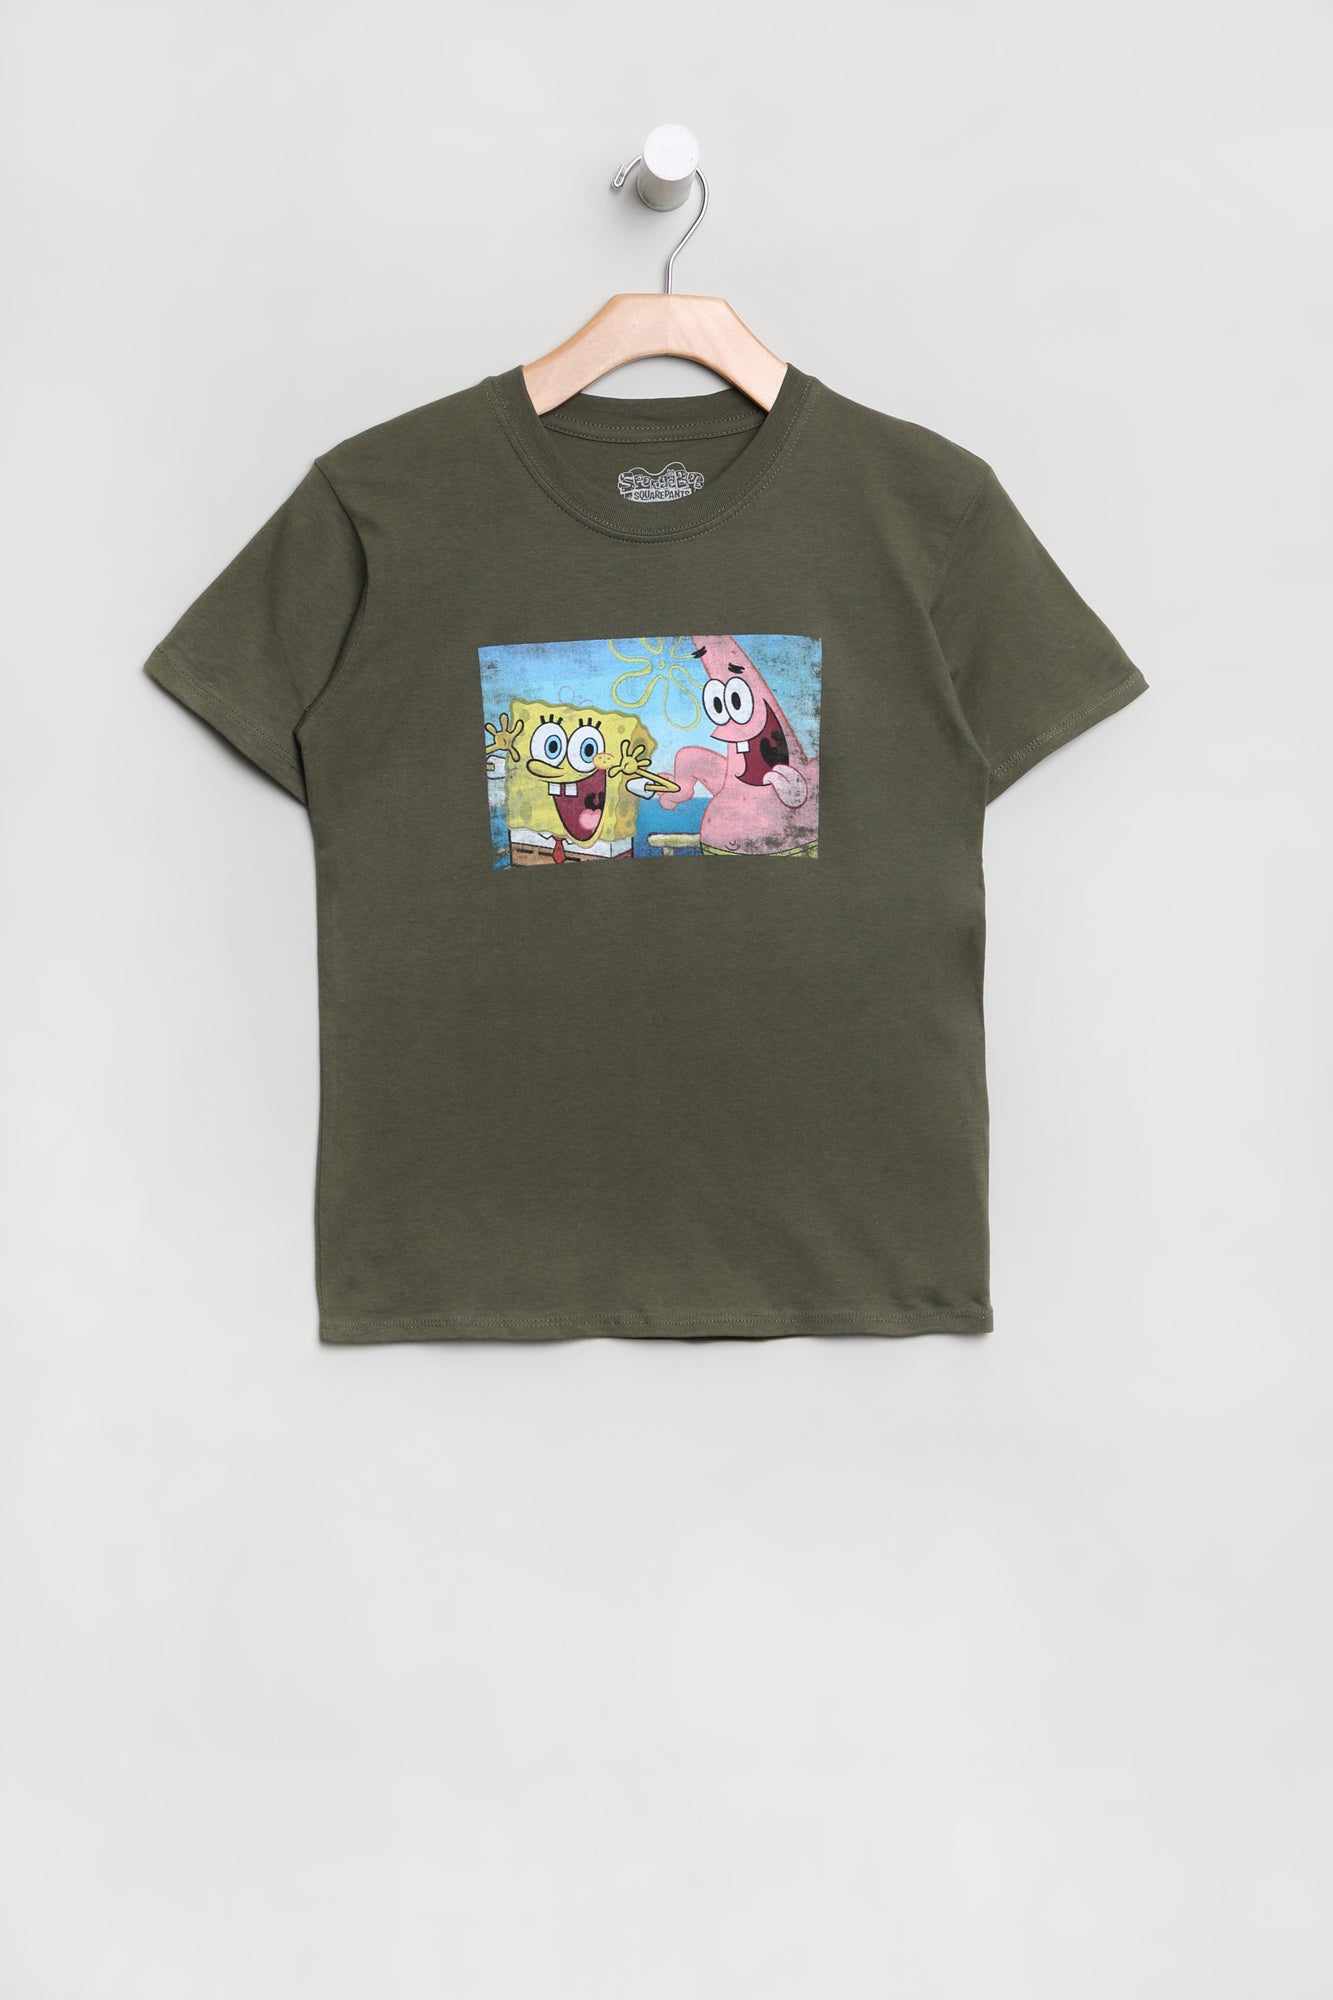 Youth SpongeBob SquarePants T-Shirt